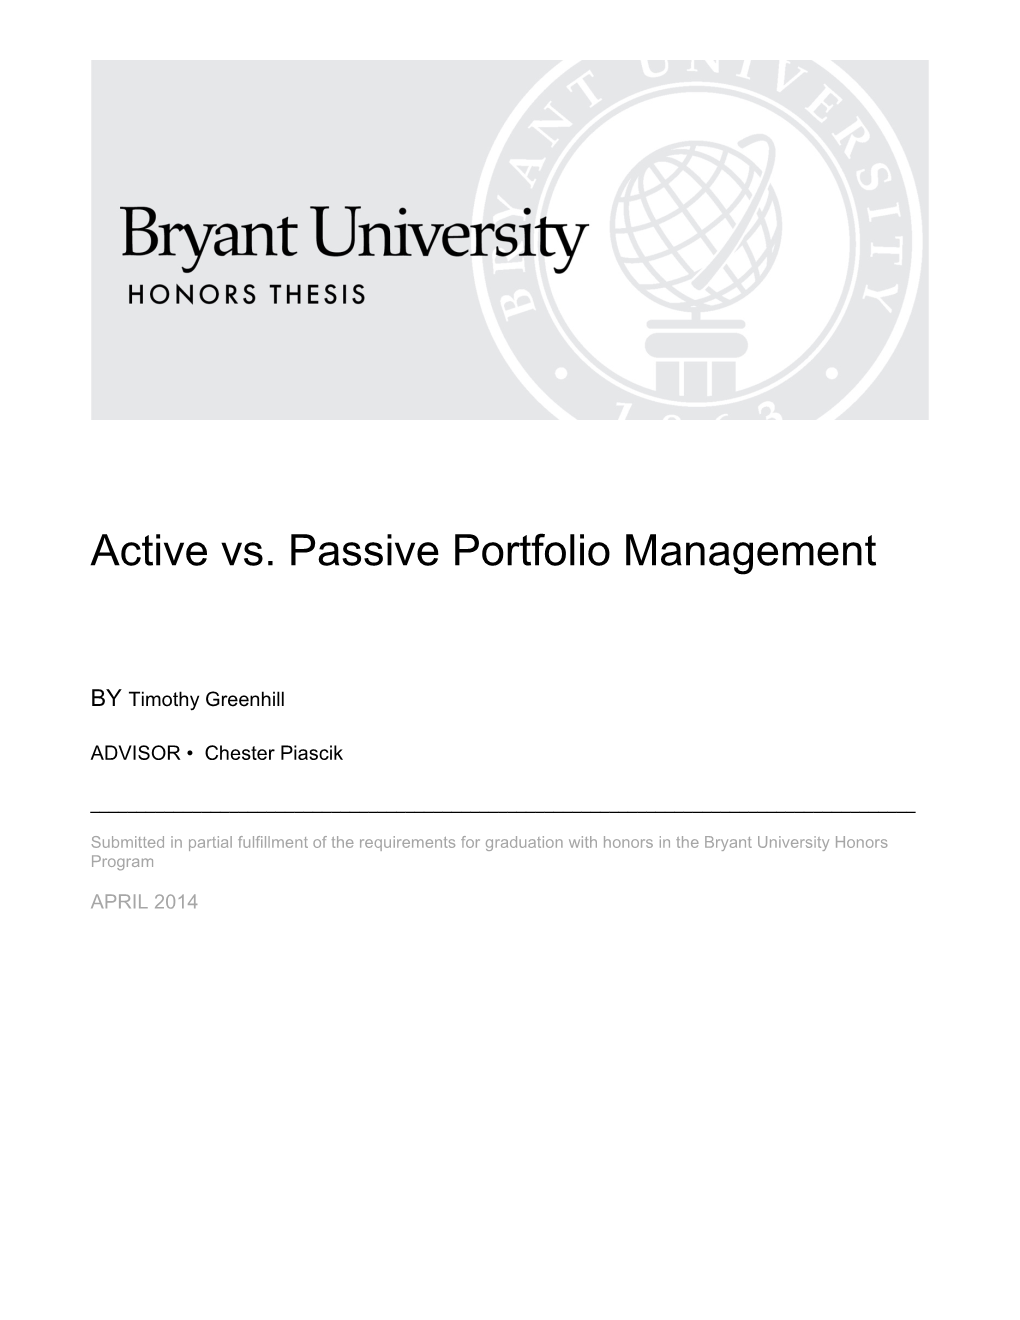 Active Vs. Passive Portfolio Management